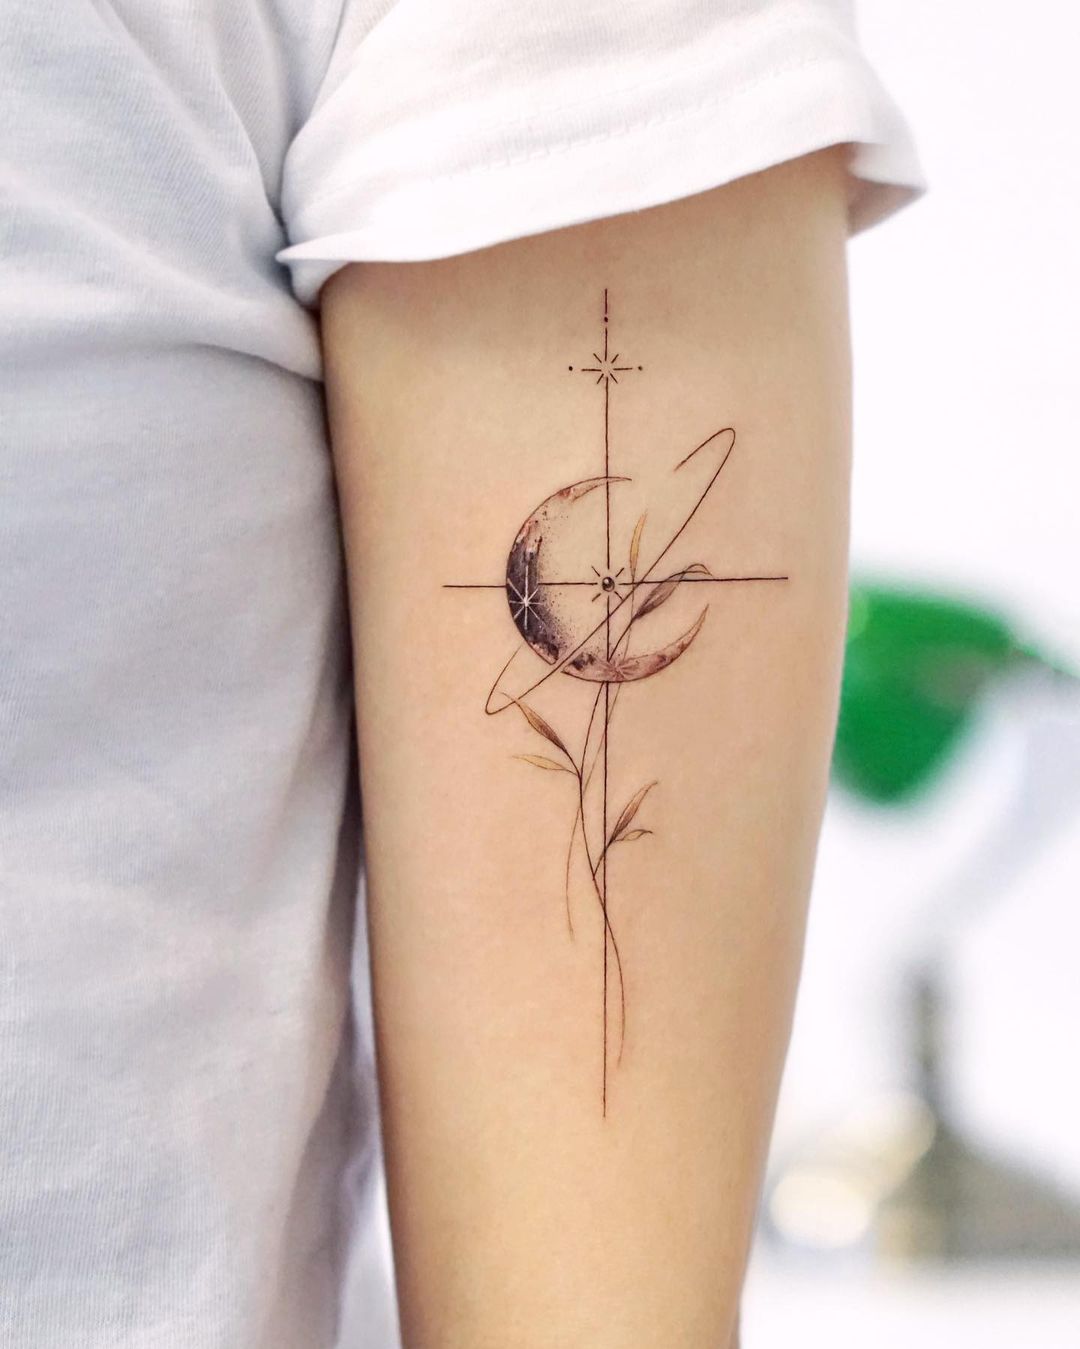 Fineline Cross Tattoo With Moon